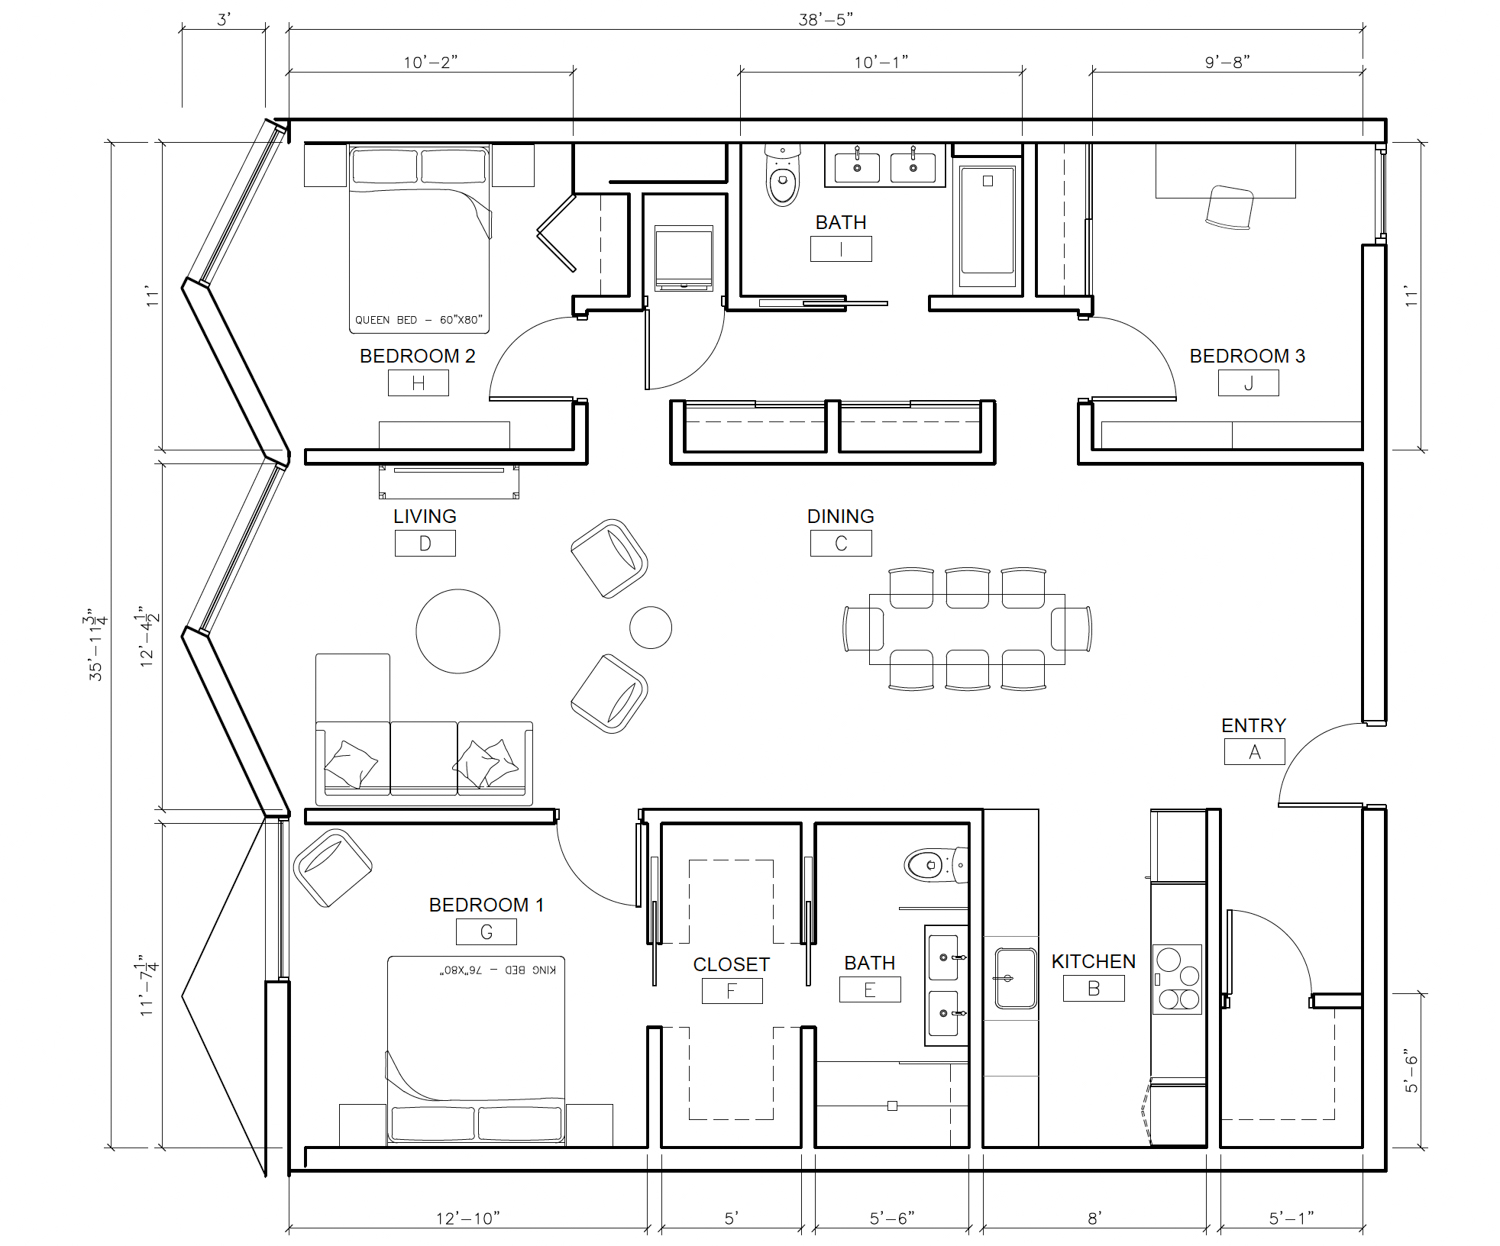 Typical three-bedroom floor plan in 67 Belcher Street, design by Stanley Saitowitz | Natoma Architects